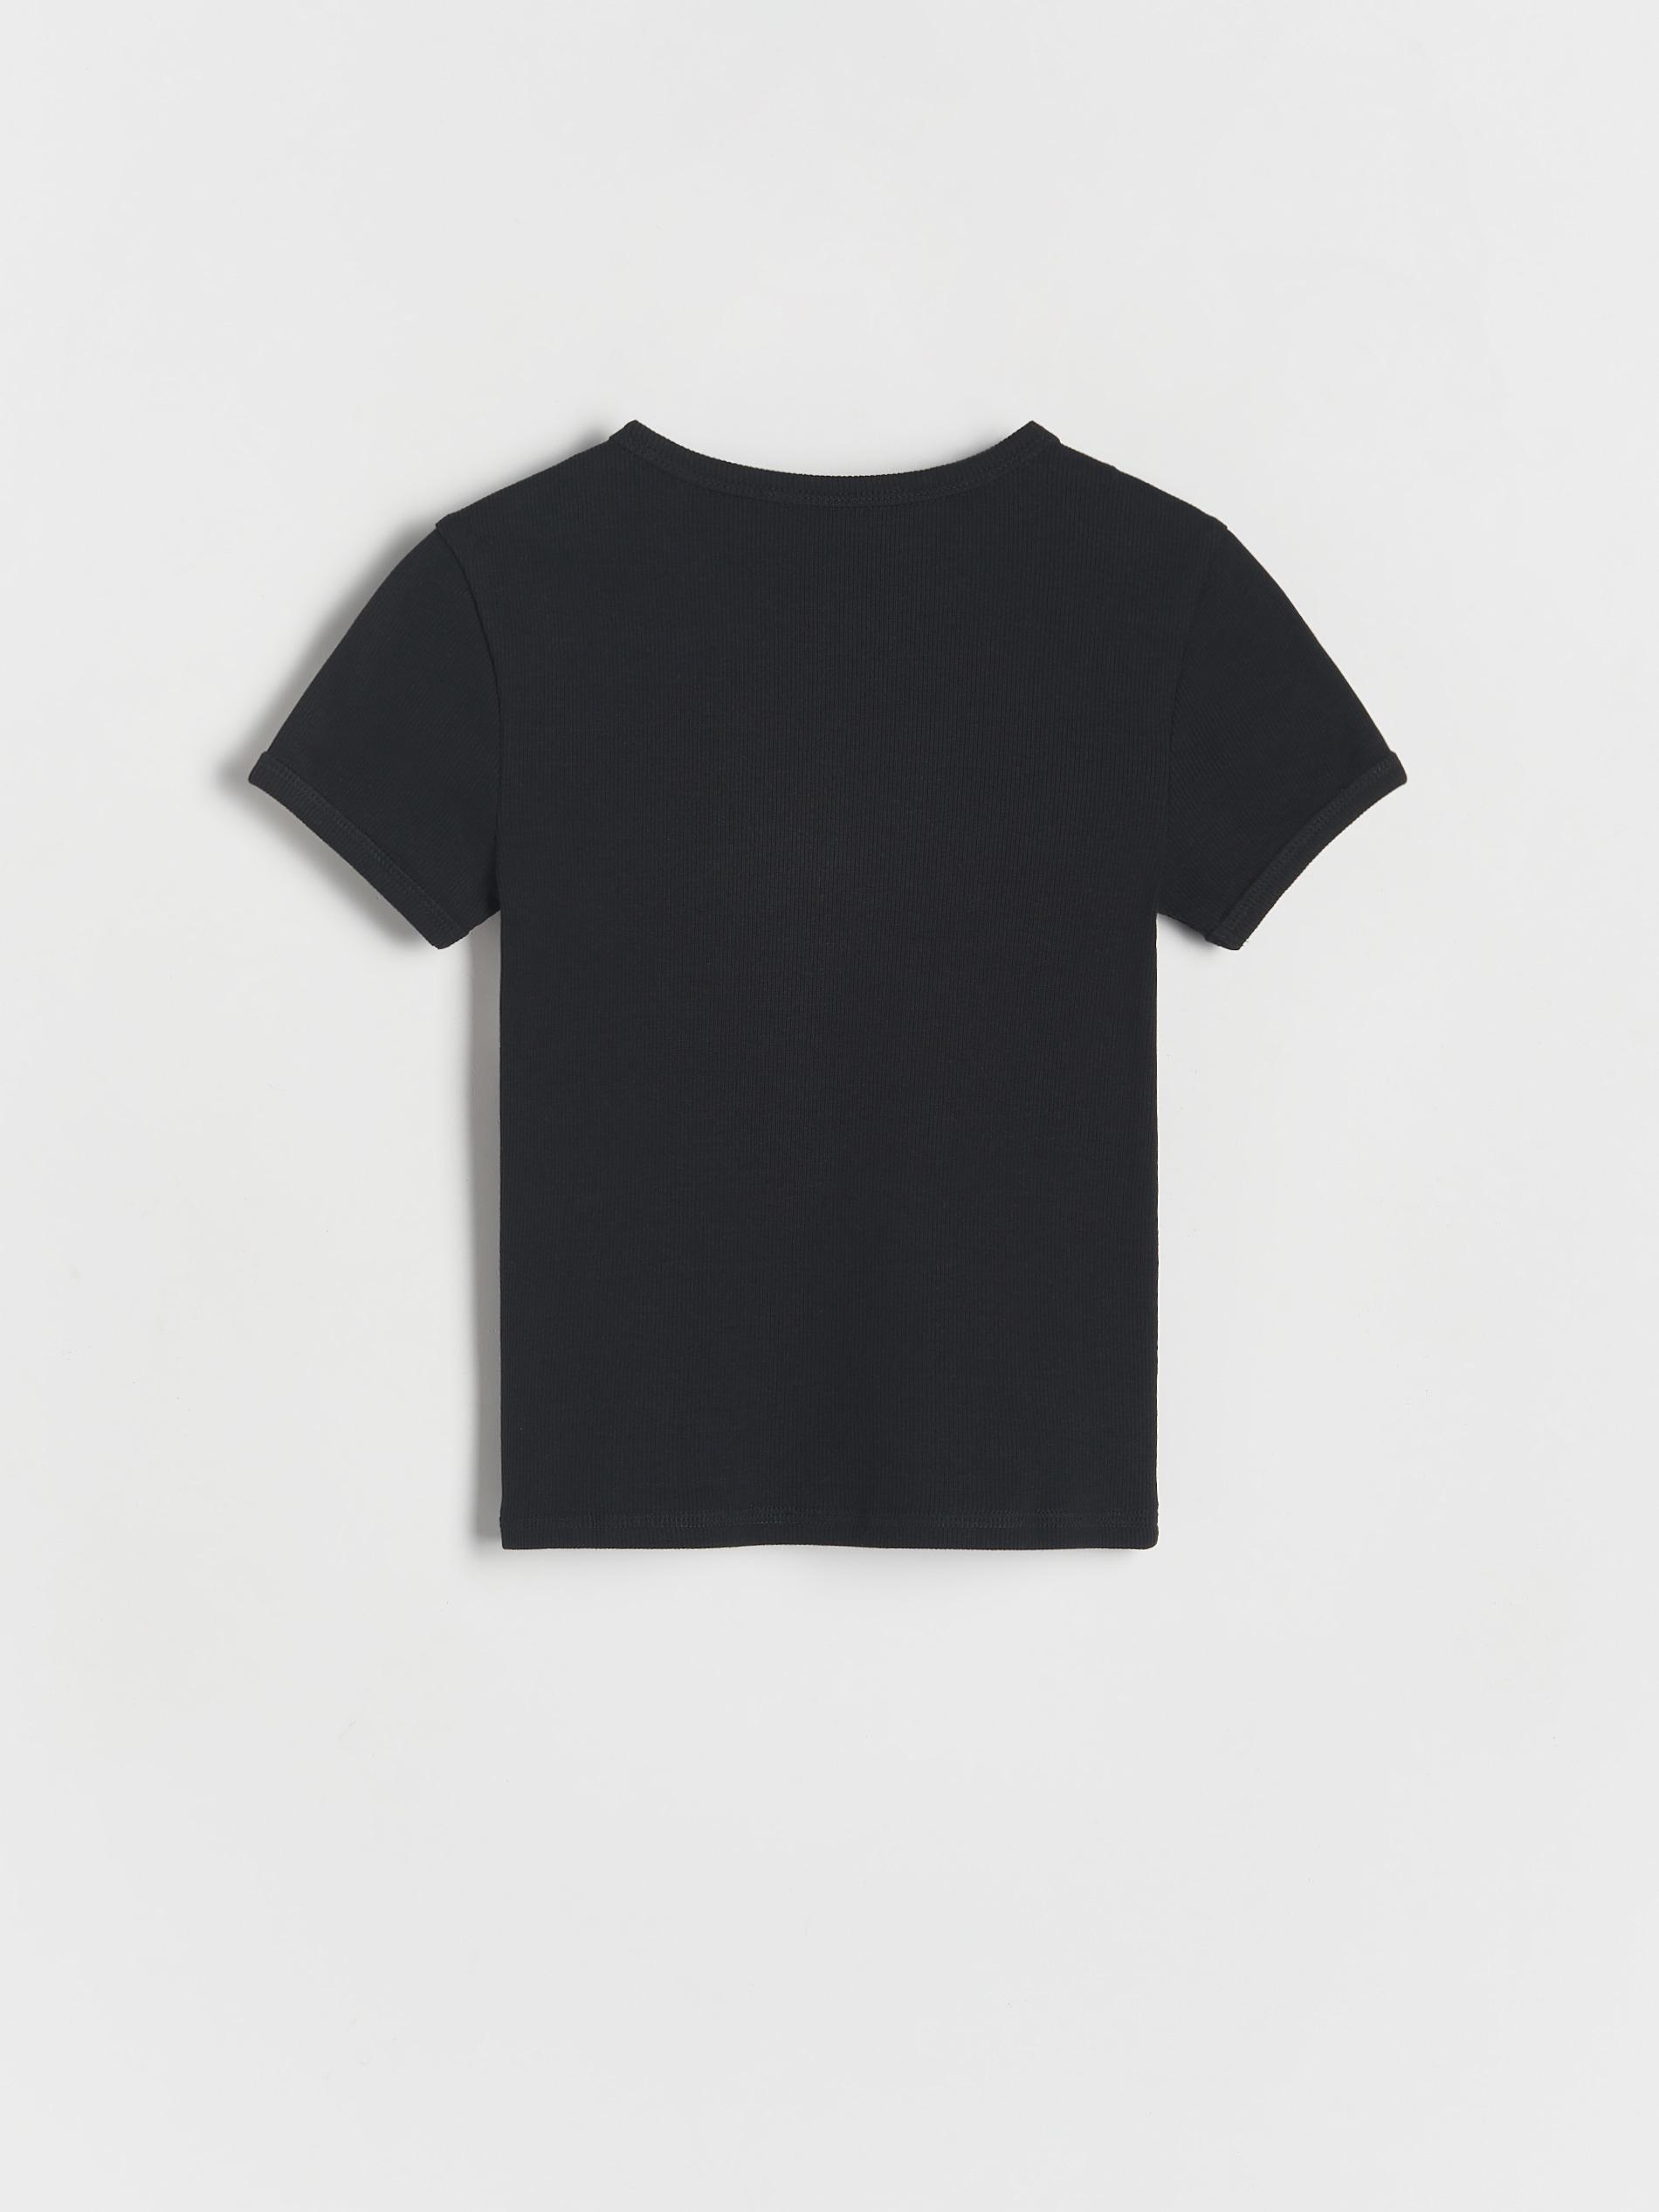 Reserved - Black Ribbed Cotton T-Shirt, Kids Girls